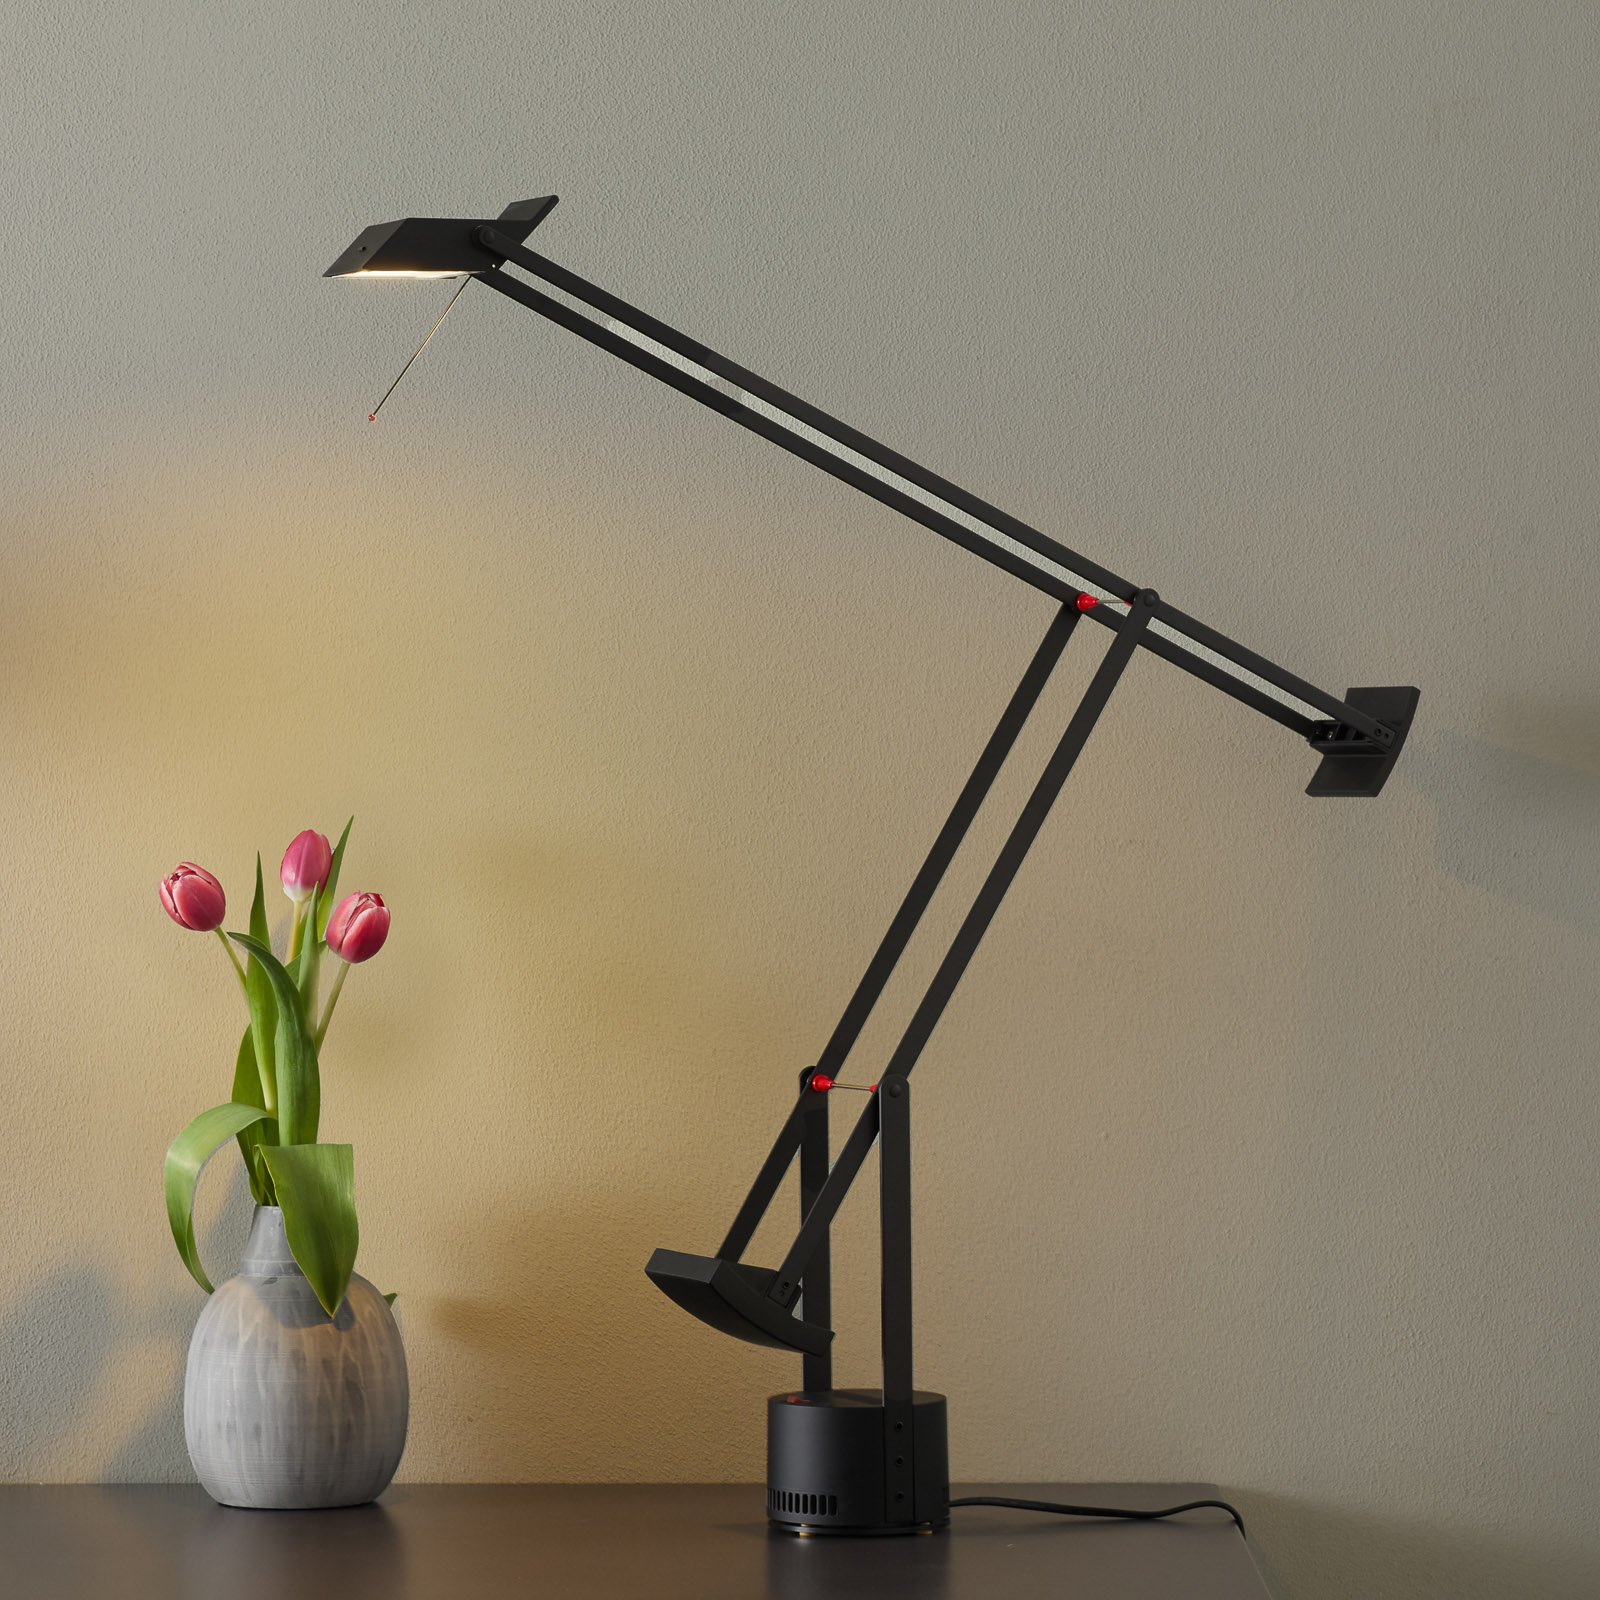 Tizio innovative designer table light